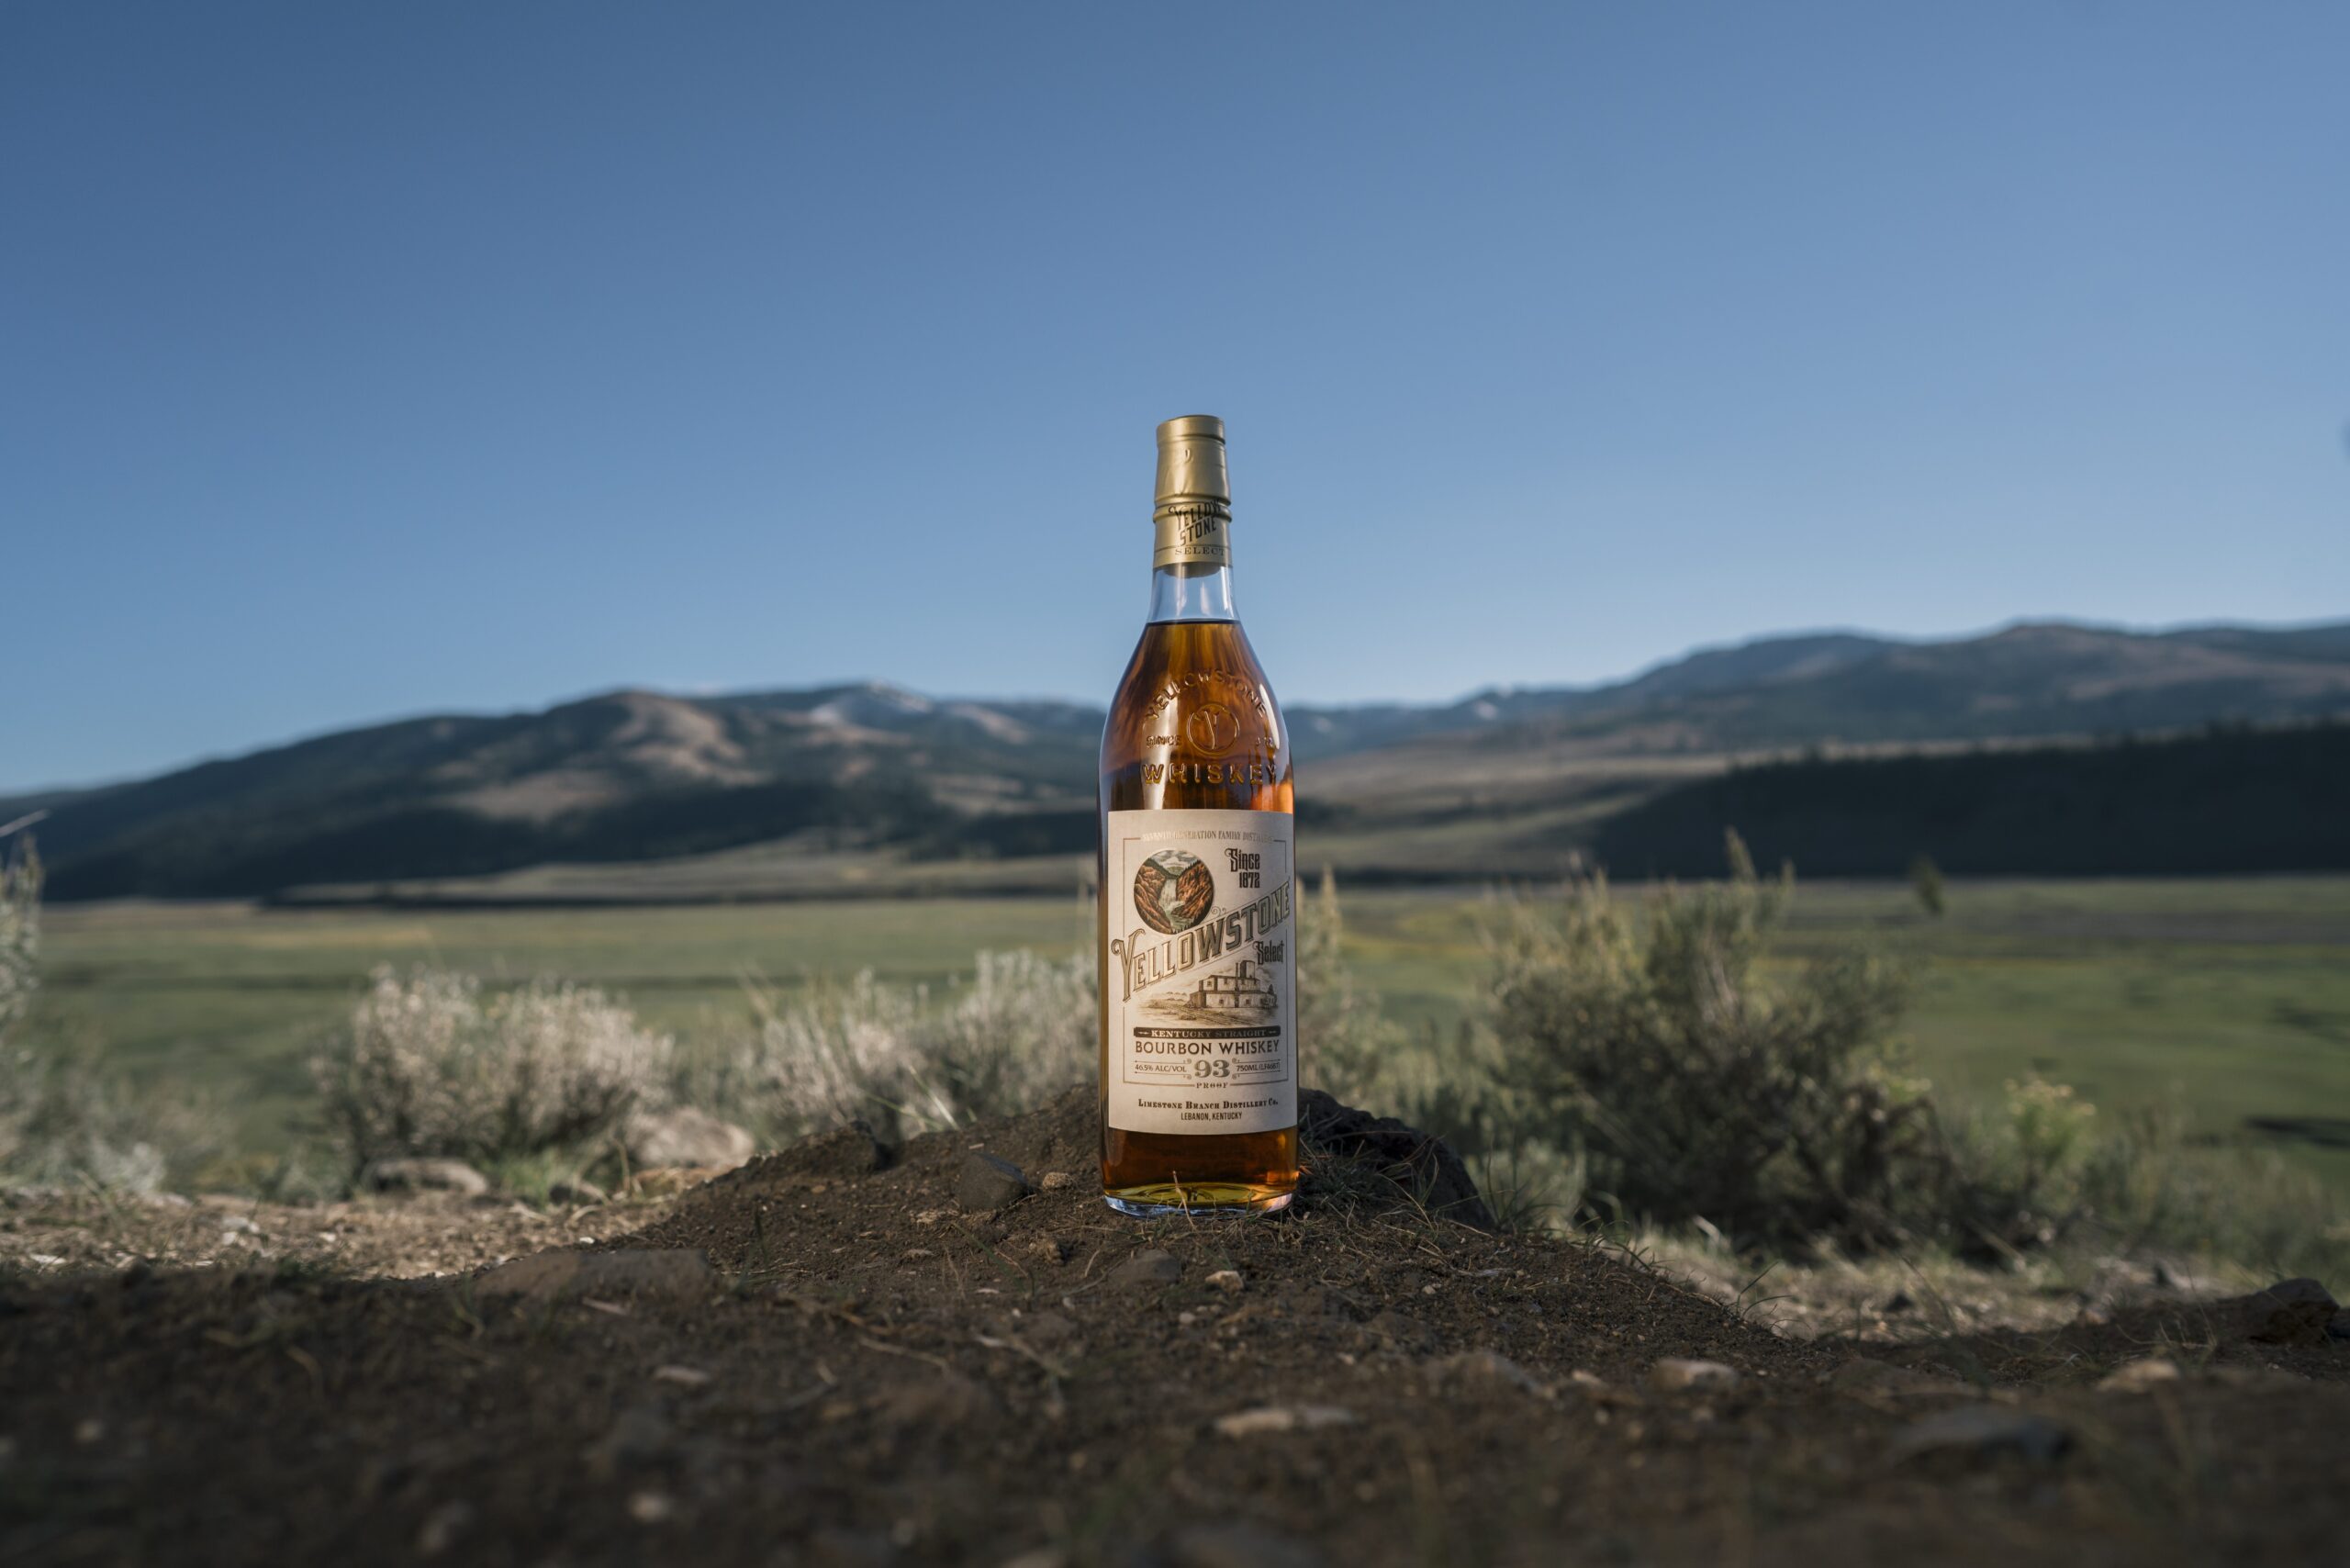 Yellowstone Bourbon bottle in Yellowstone national park